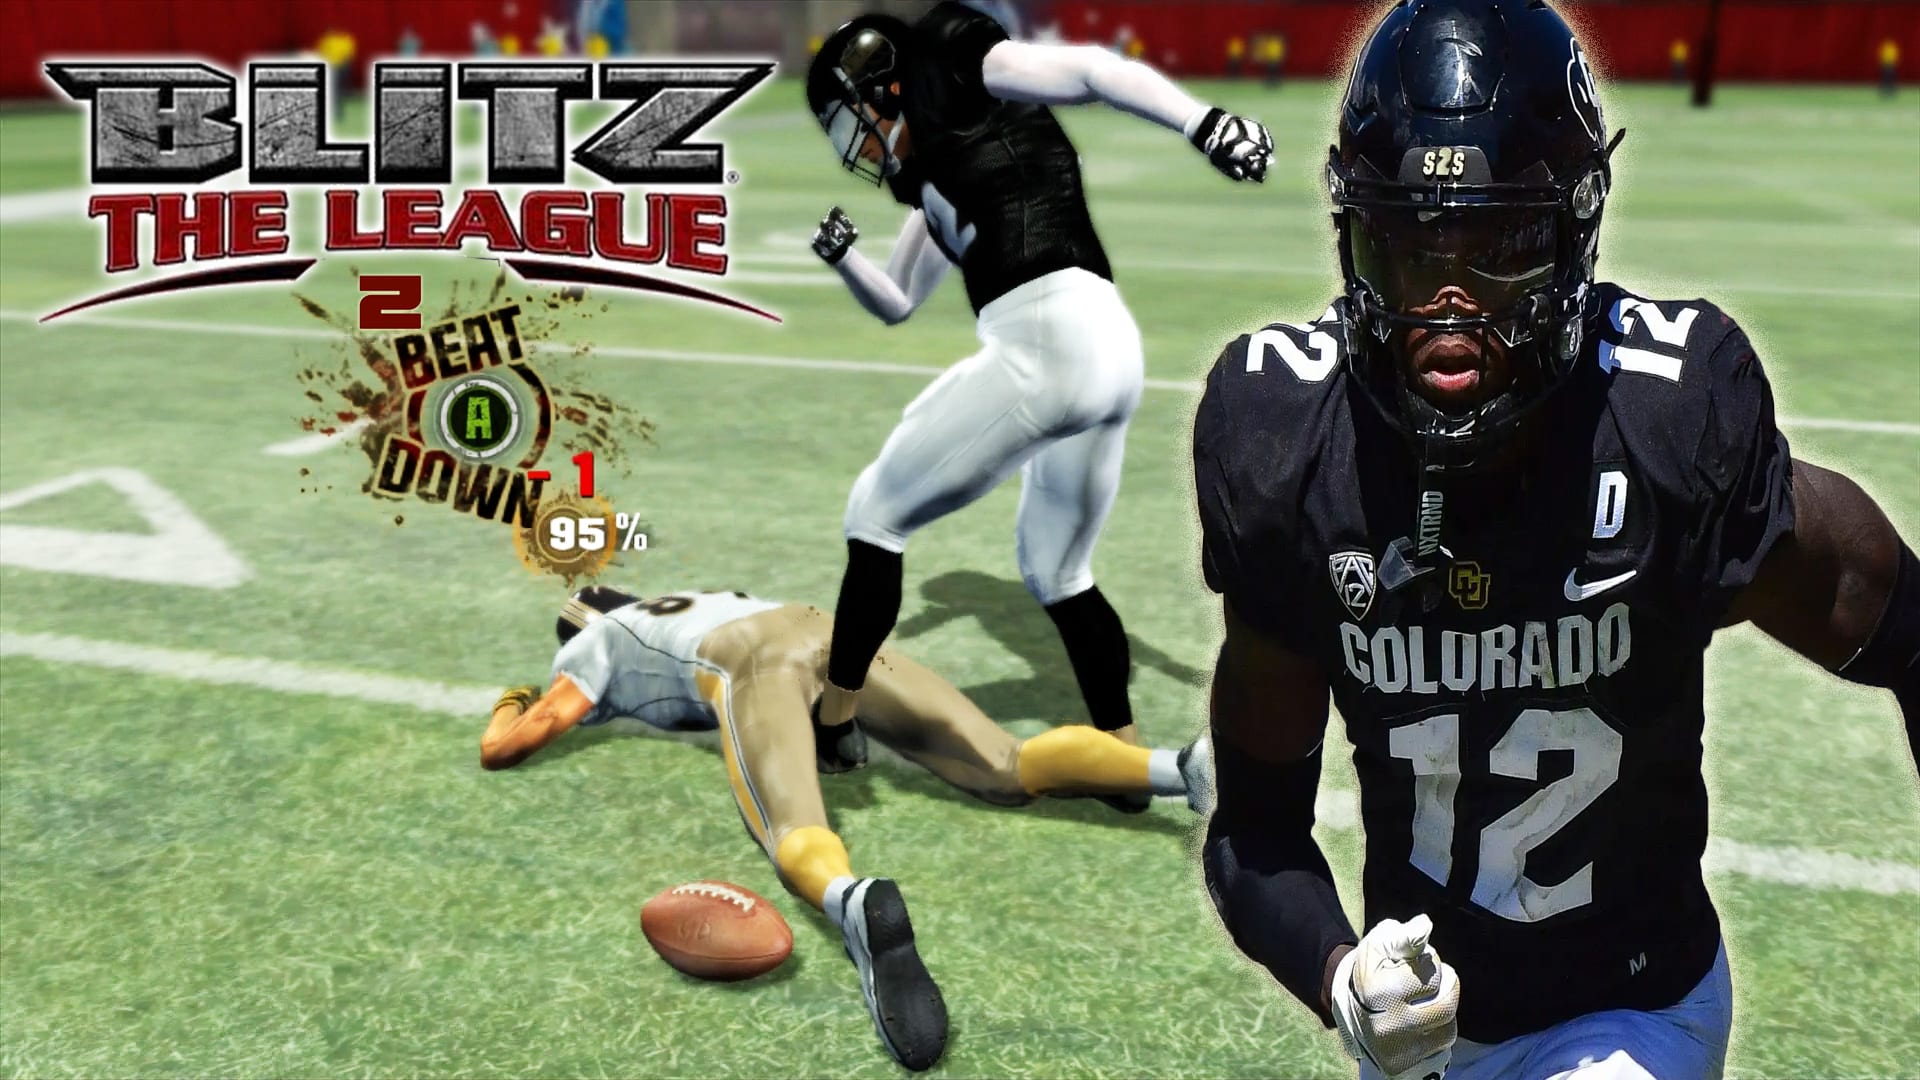 Blitz The League 2 (Colorado University) Division 3 (Week 2) Highlights